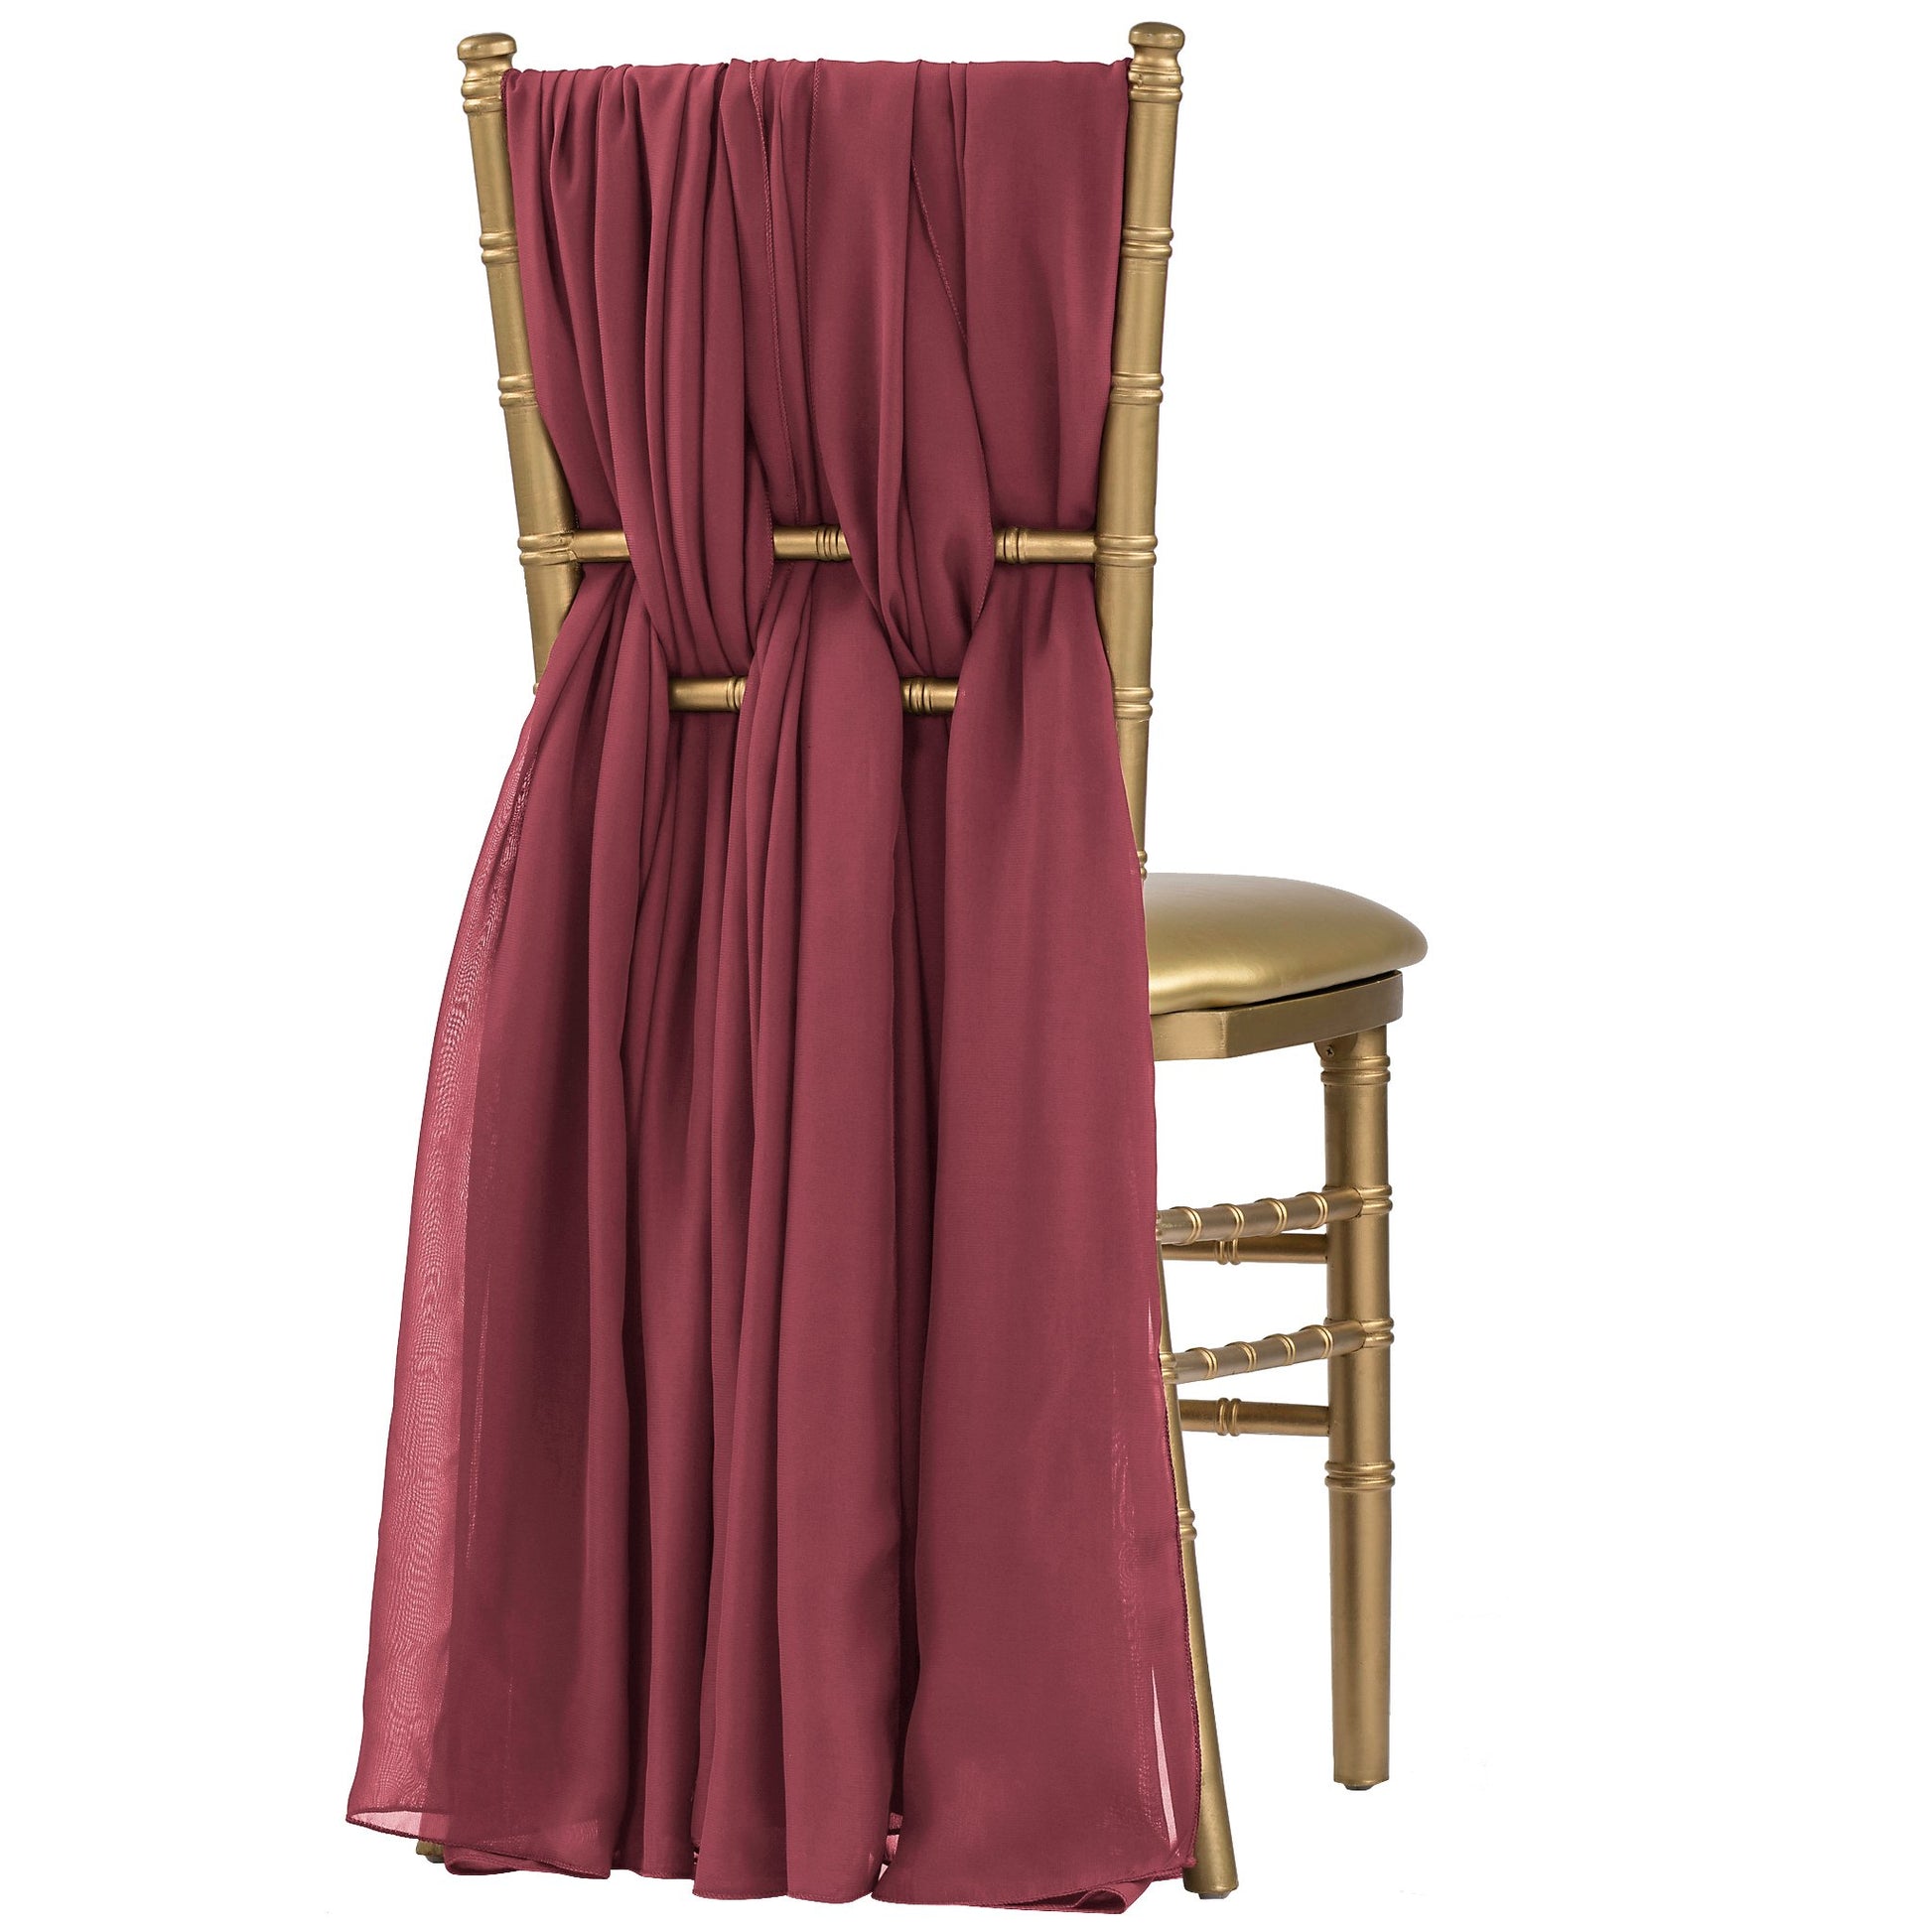 5pcs Pack of Chiffon Chair Sashes/Ties - Berry - CV Linens